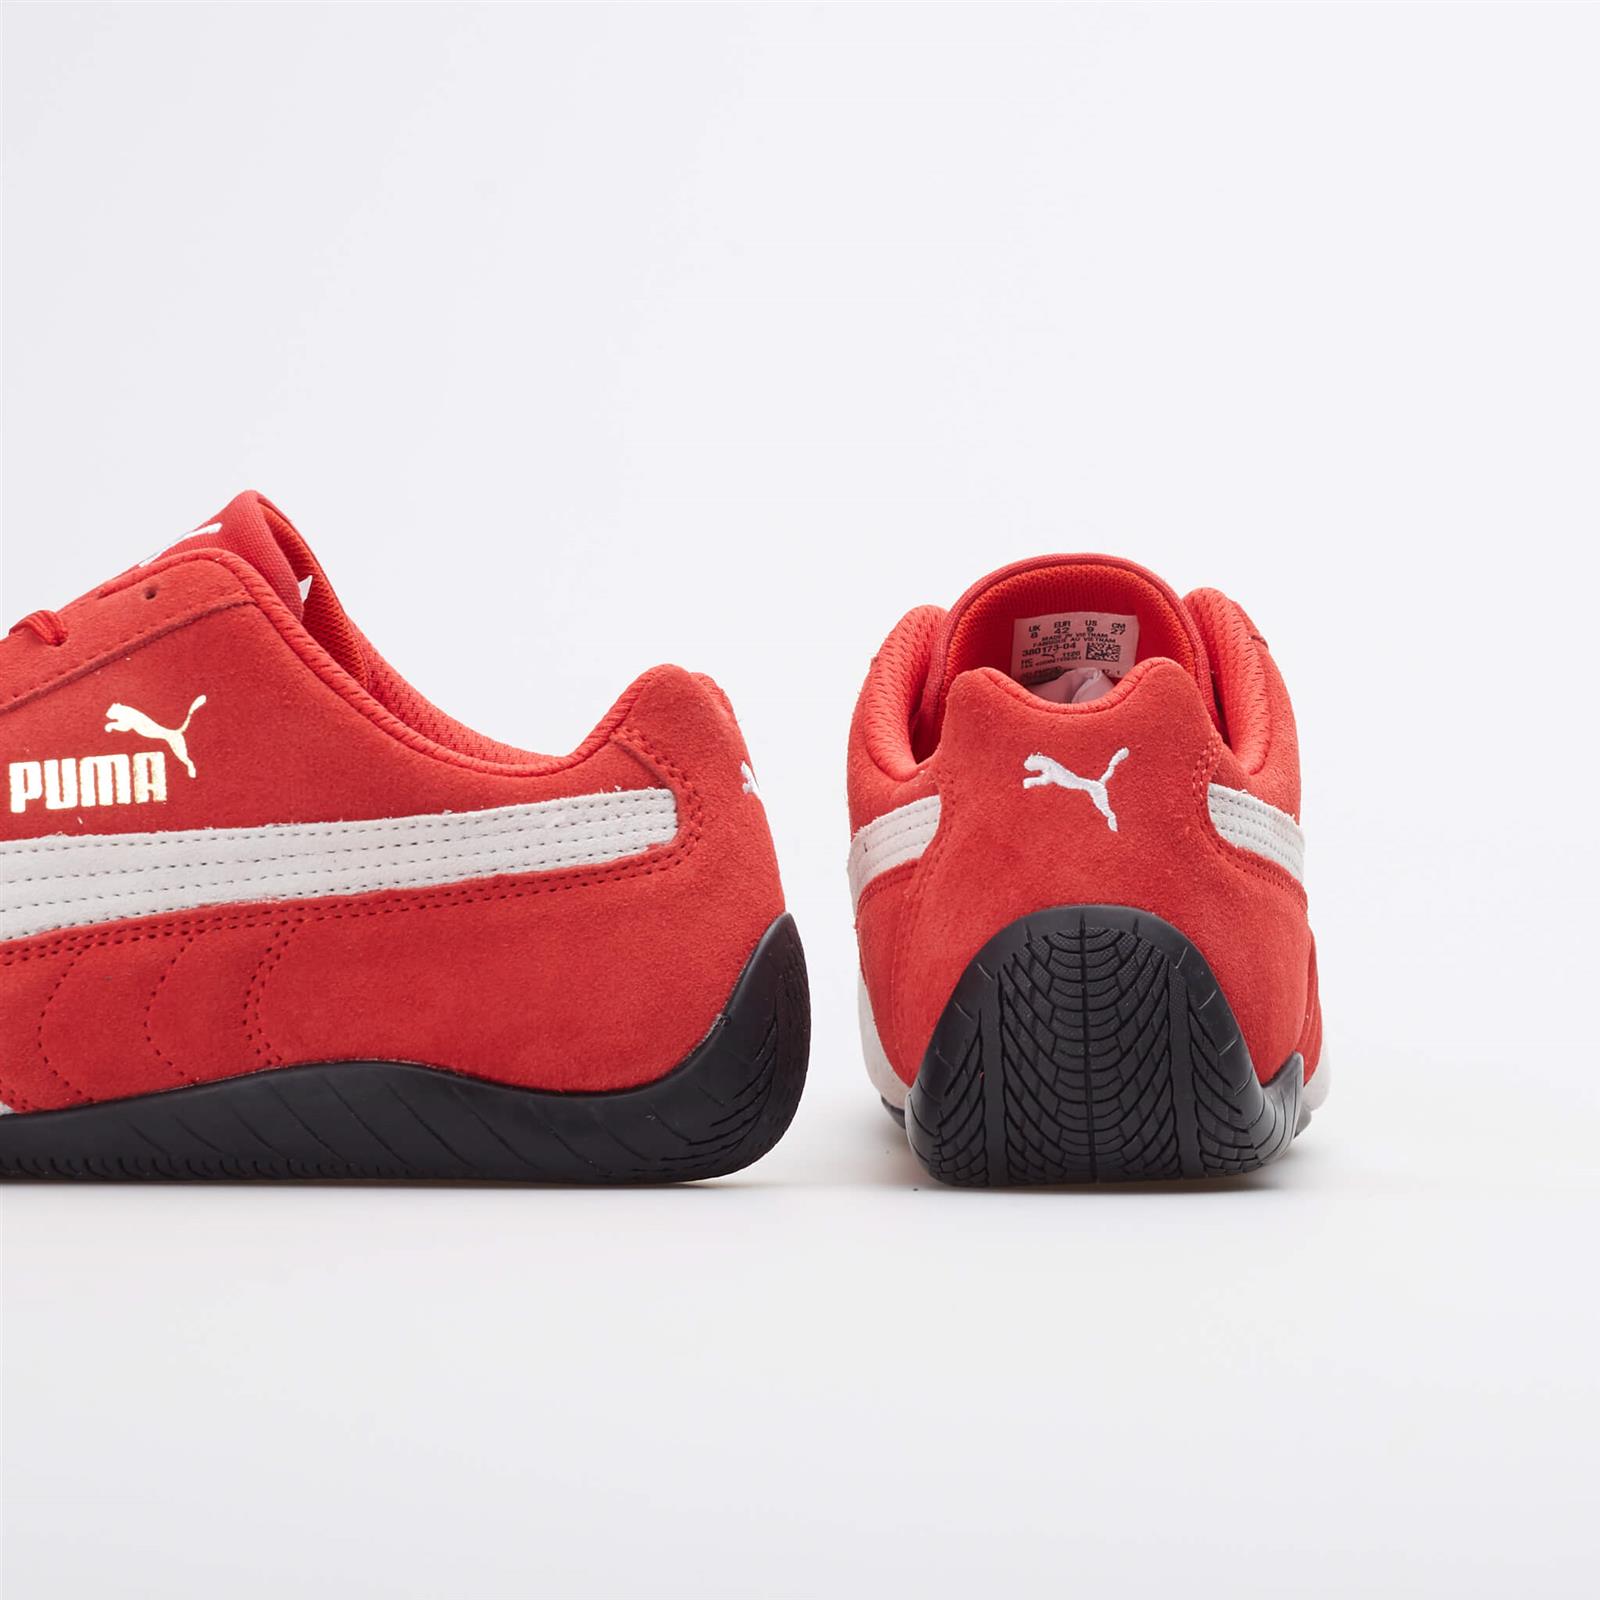 Puma SpeedCat LS RISK RED 380173 04 | Men \ Men's footwear \ Sneakers ...